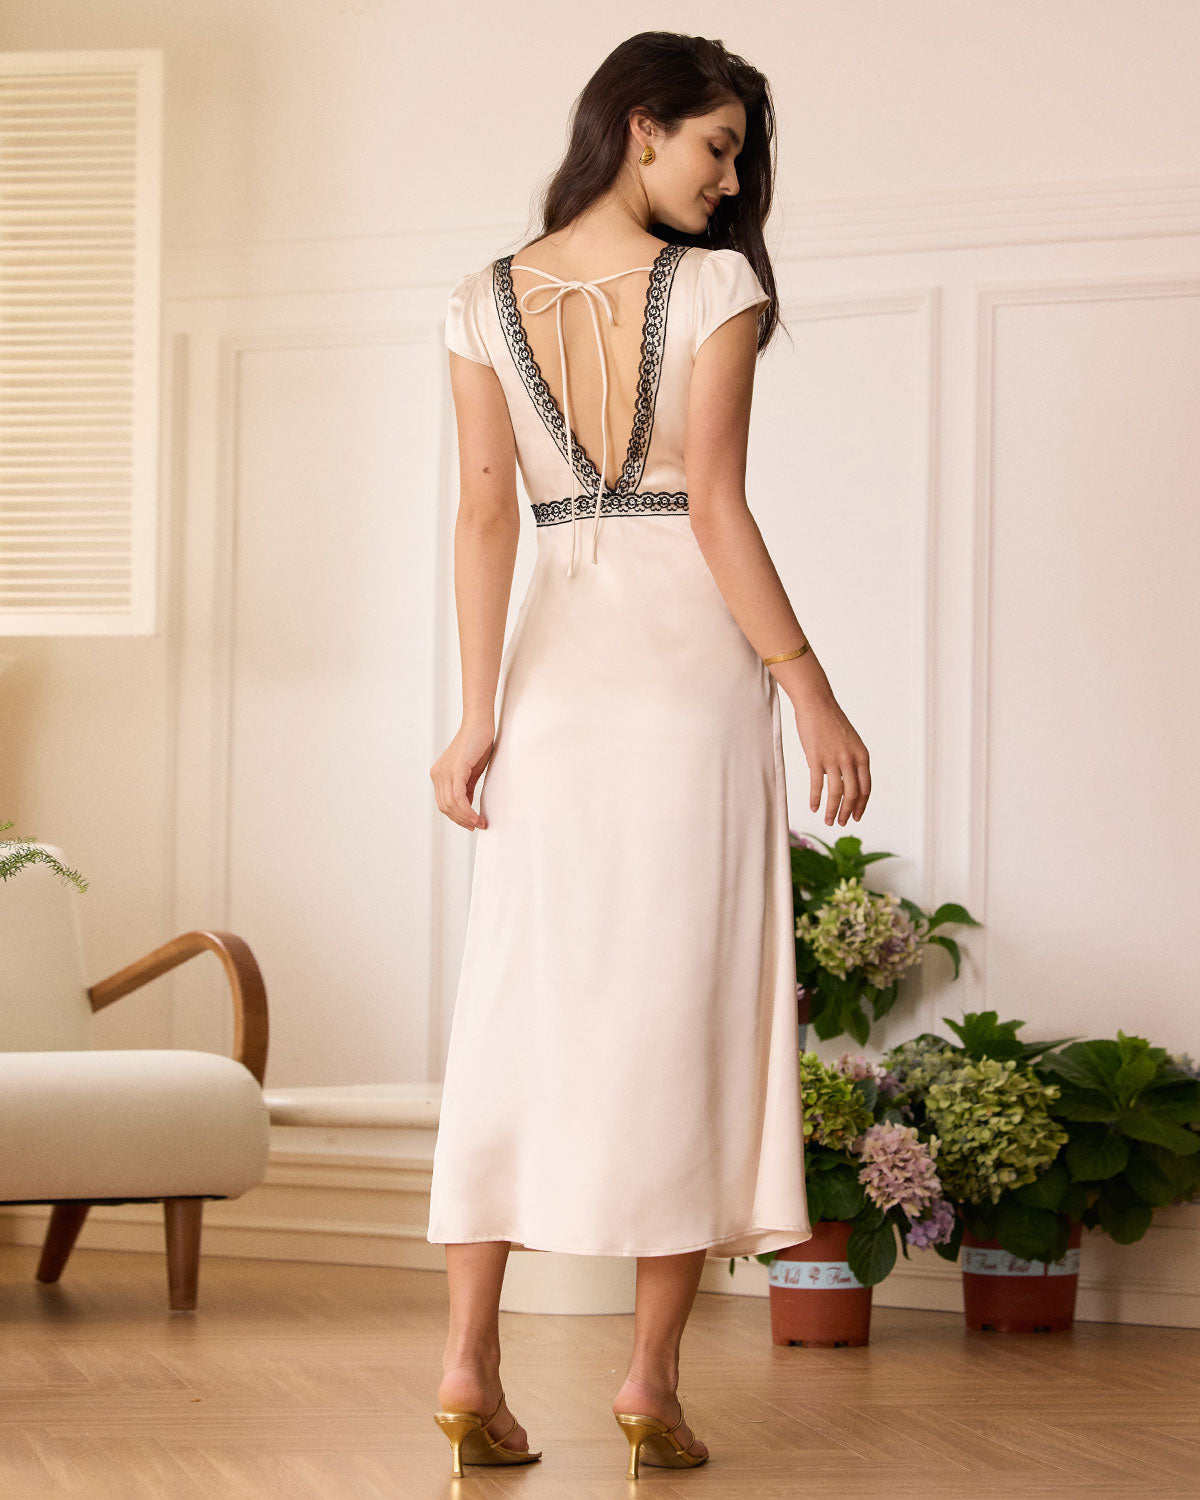 The Apricot Lace Backless Maxi Dress Dresses - RIHOAS